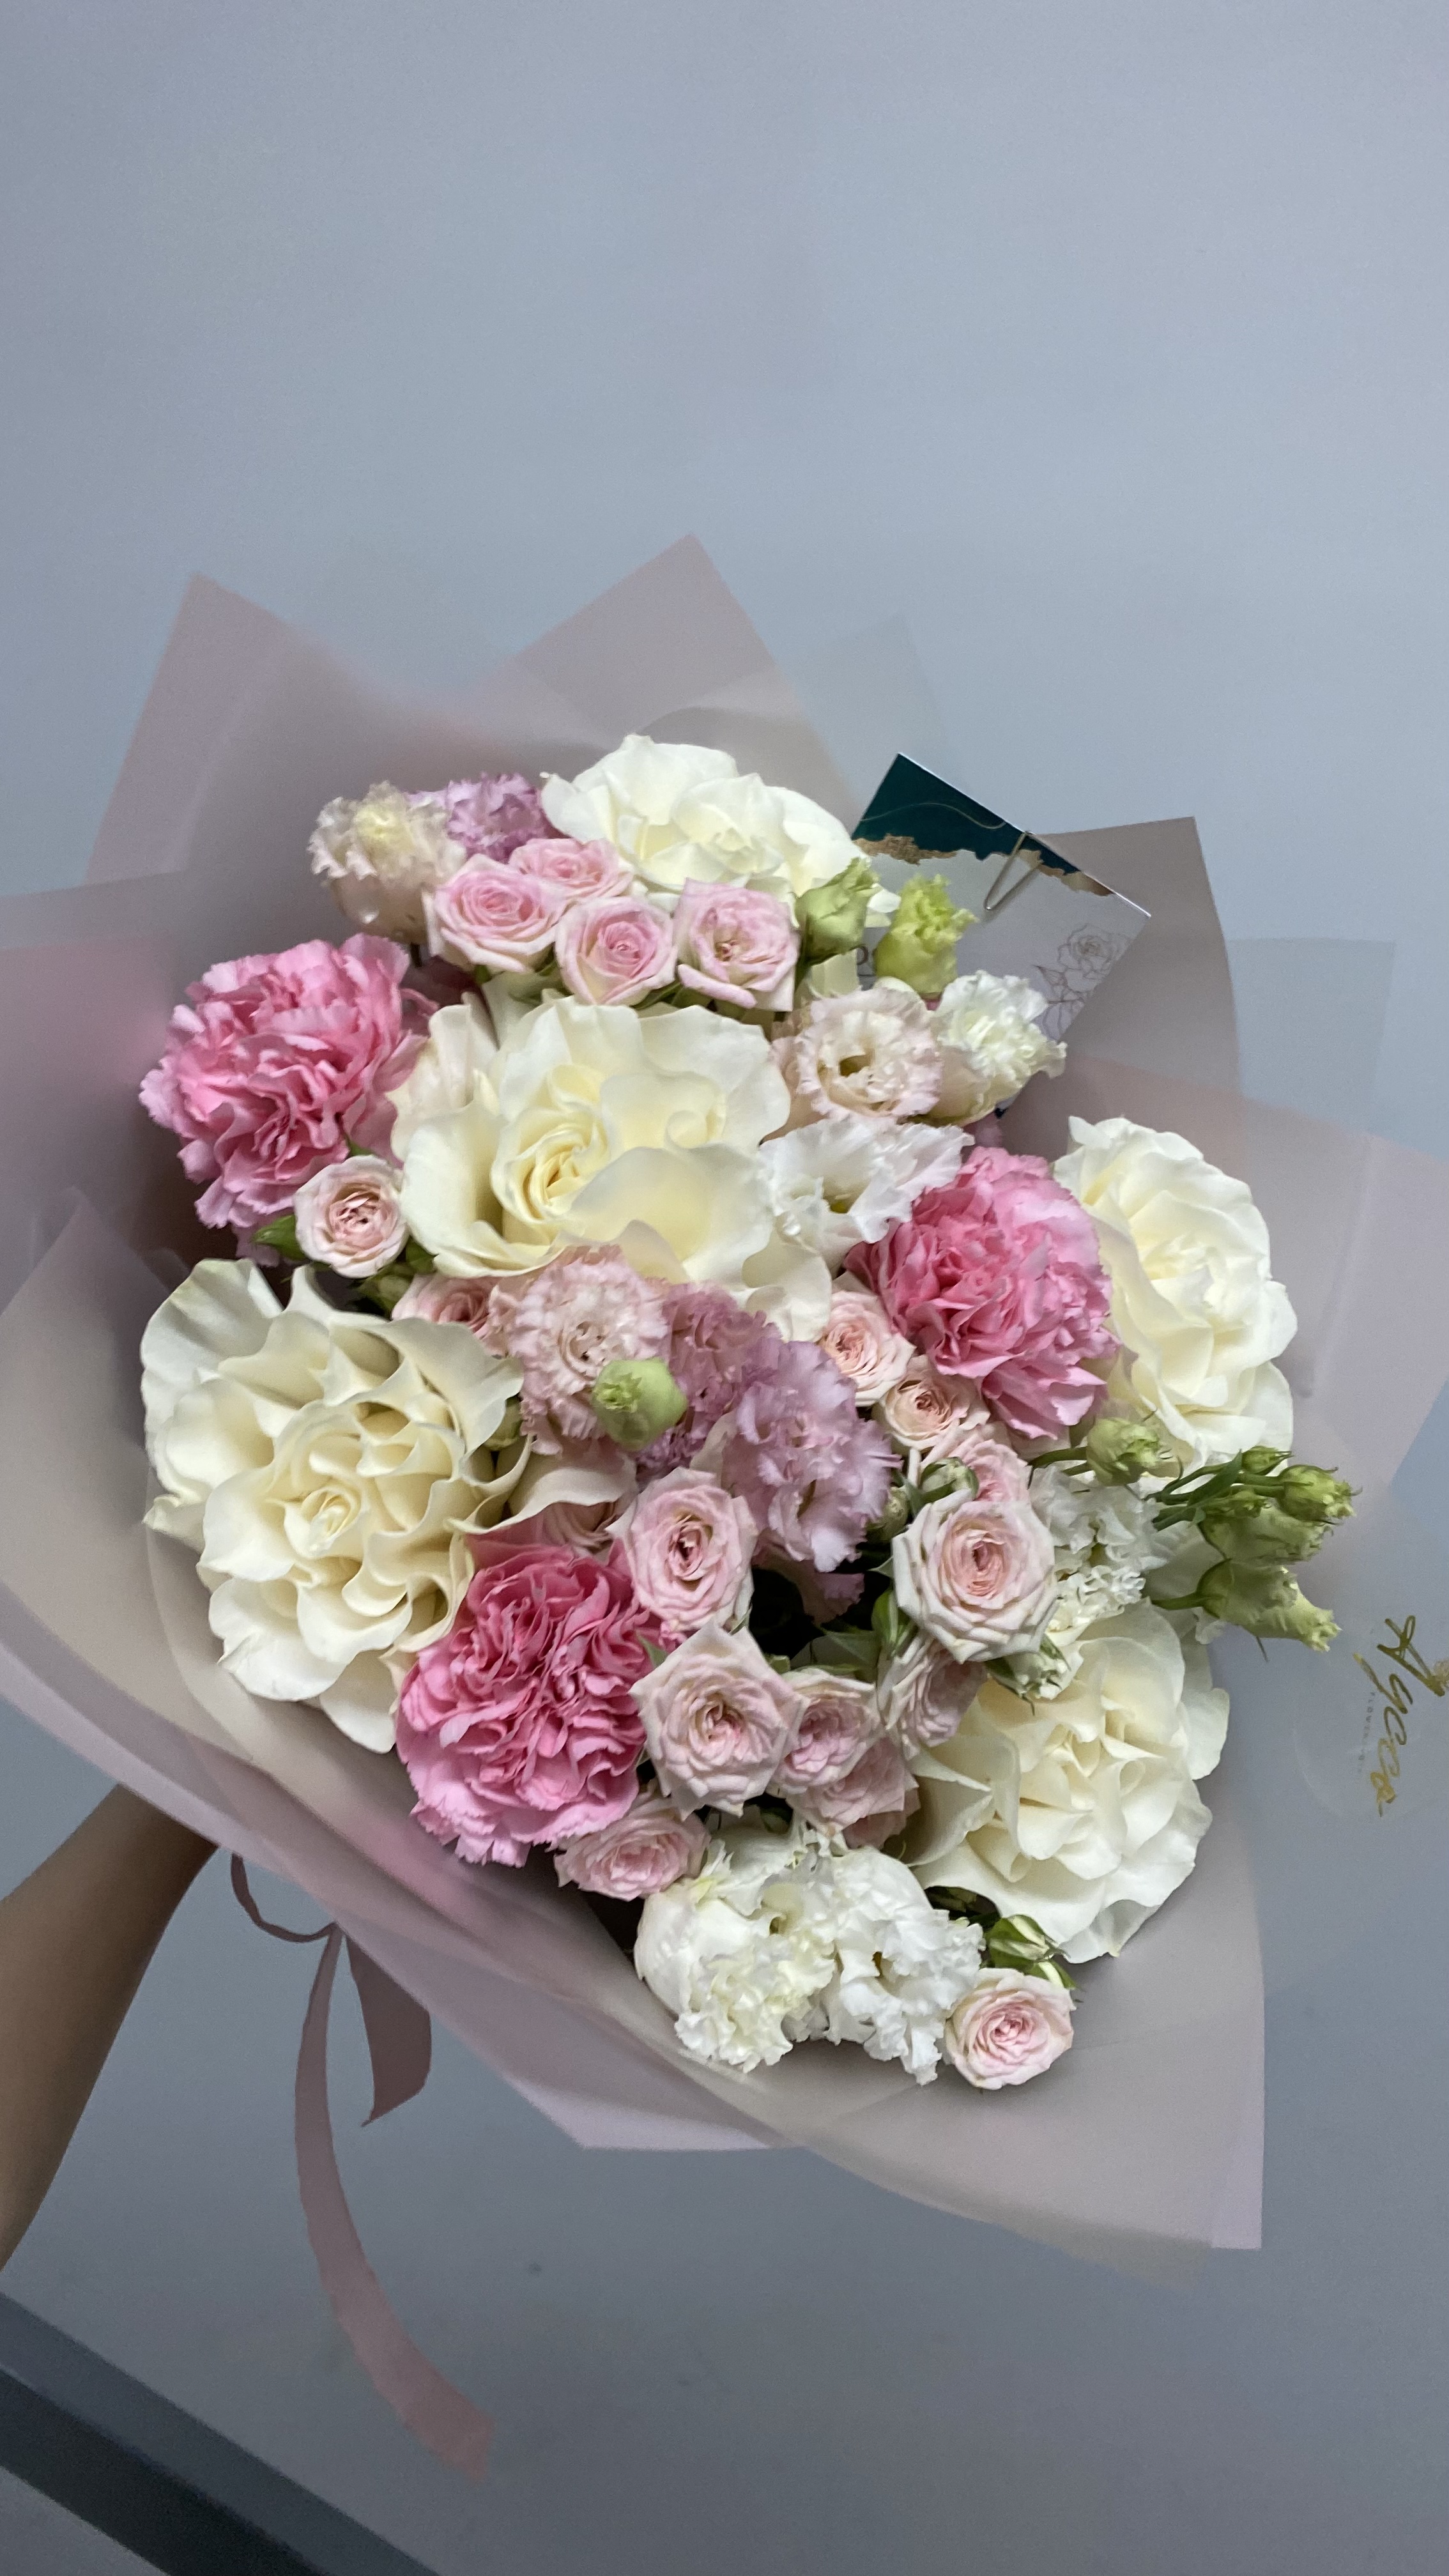 Bouquet of Eurobouquet L flowers delivered to Uralsk